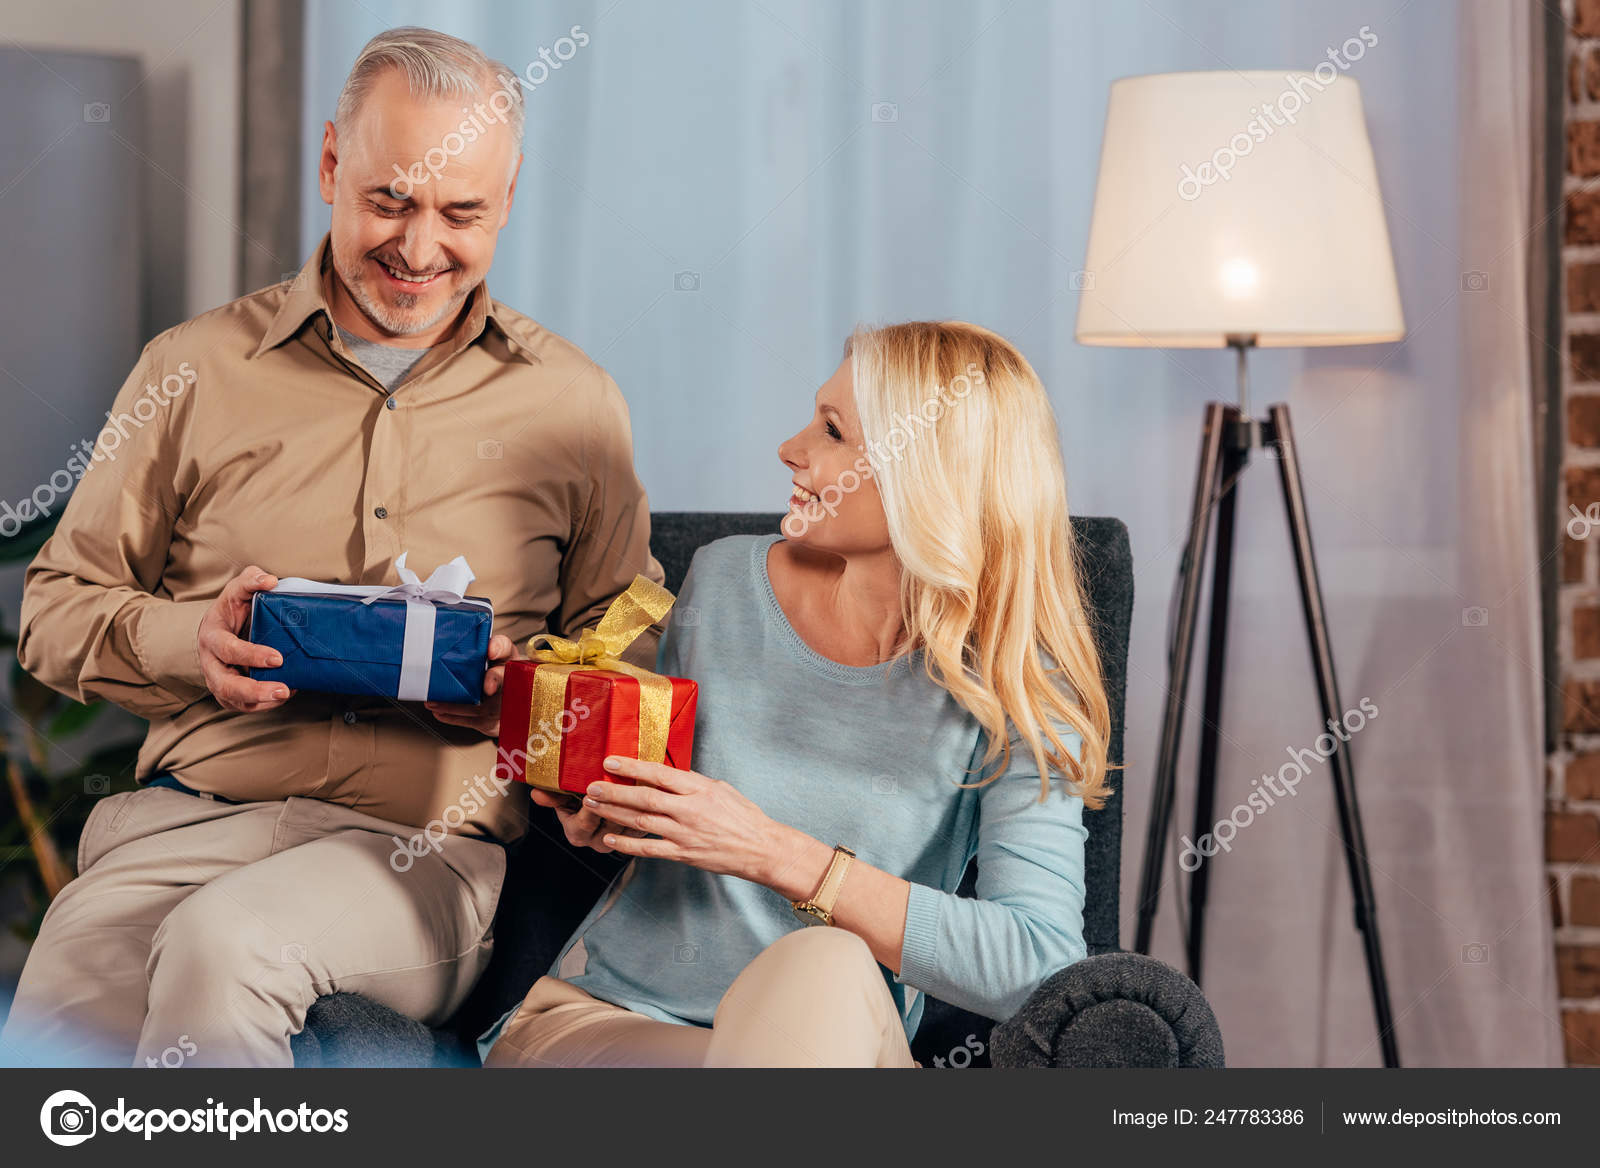 https://st4.depositphotos.com/12982378/24778/i/1600/depositphotos_247783386-stock-photo-attractive-wife-smiling-husband-holding.jpg